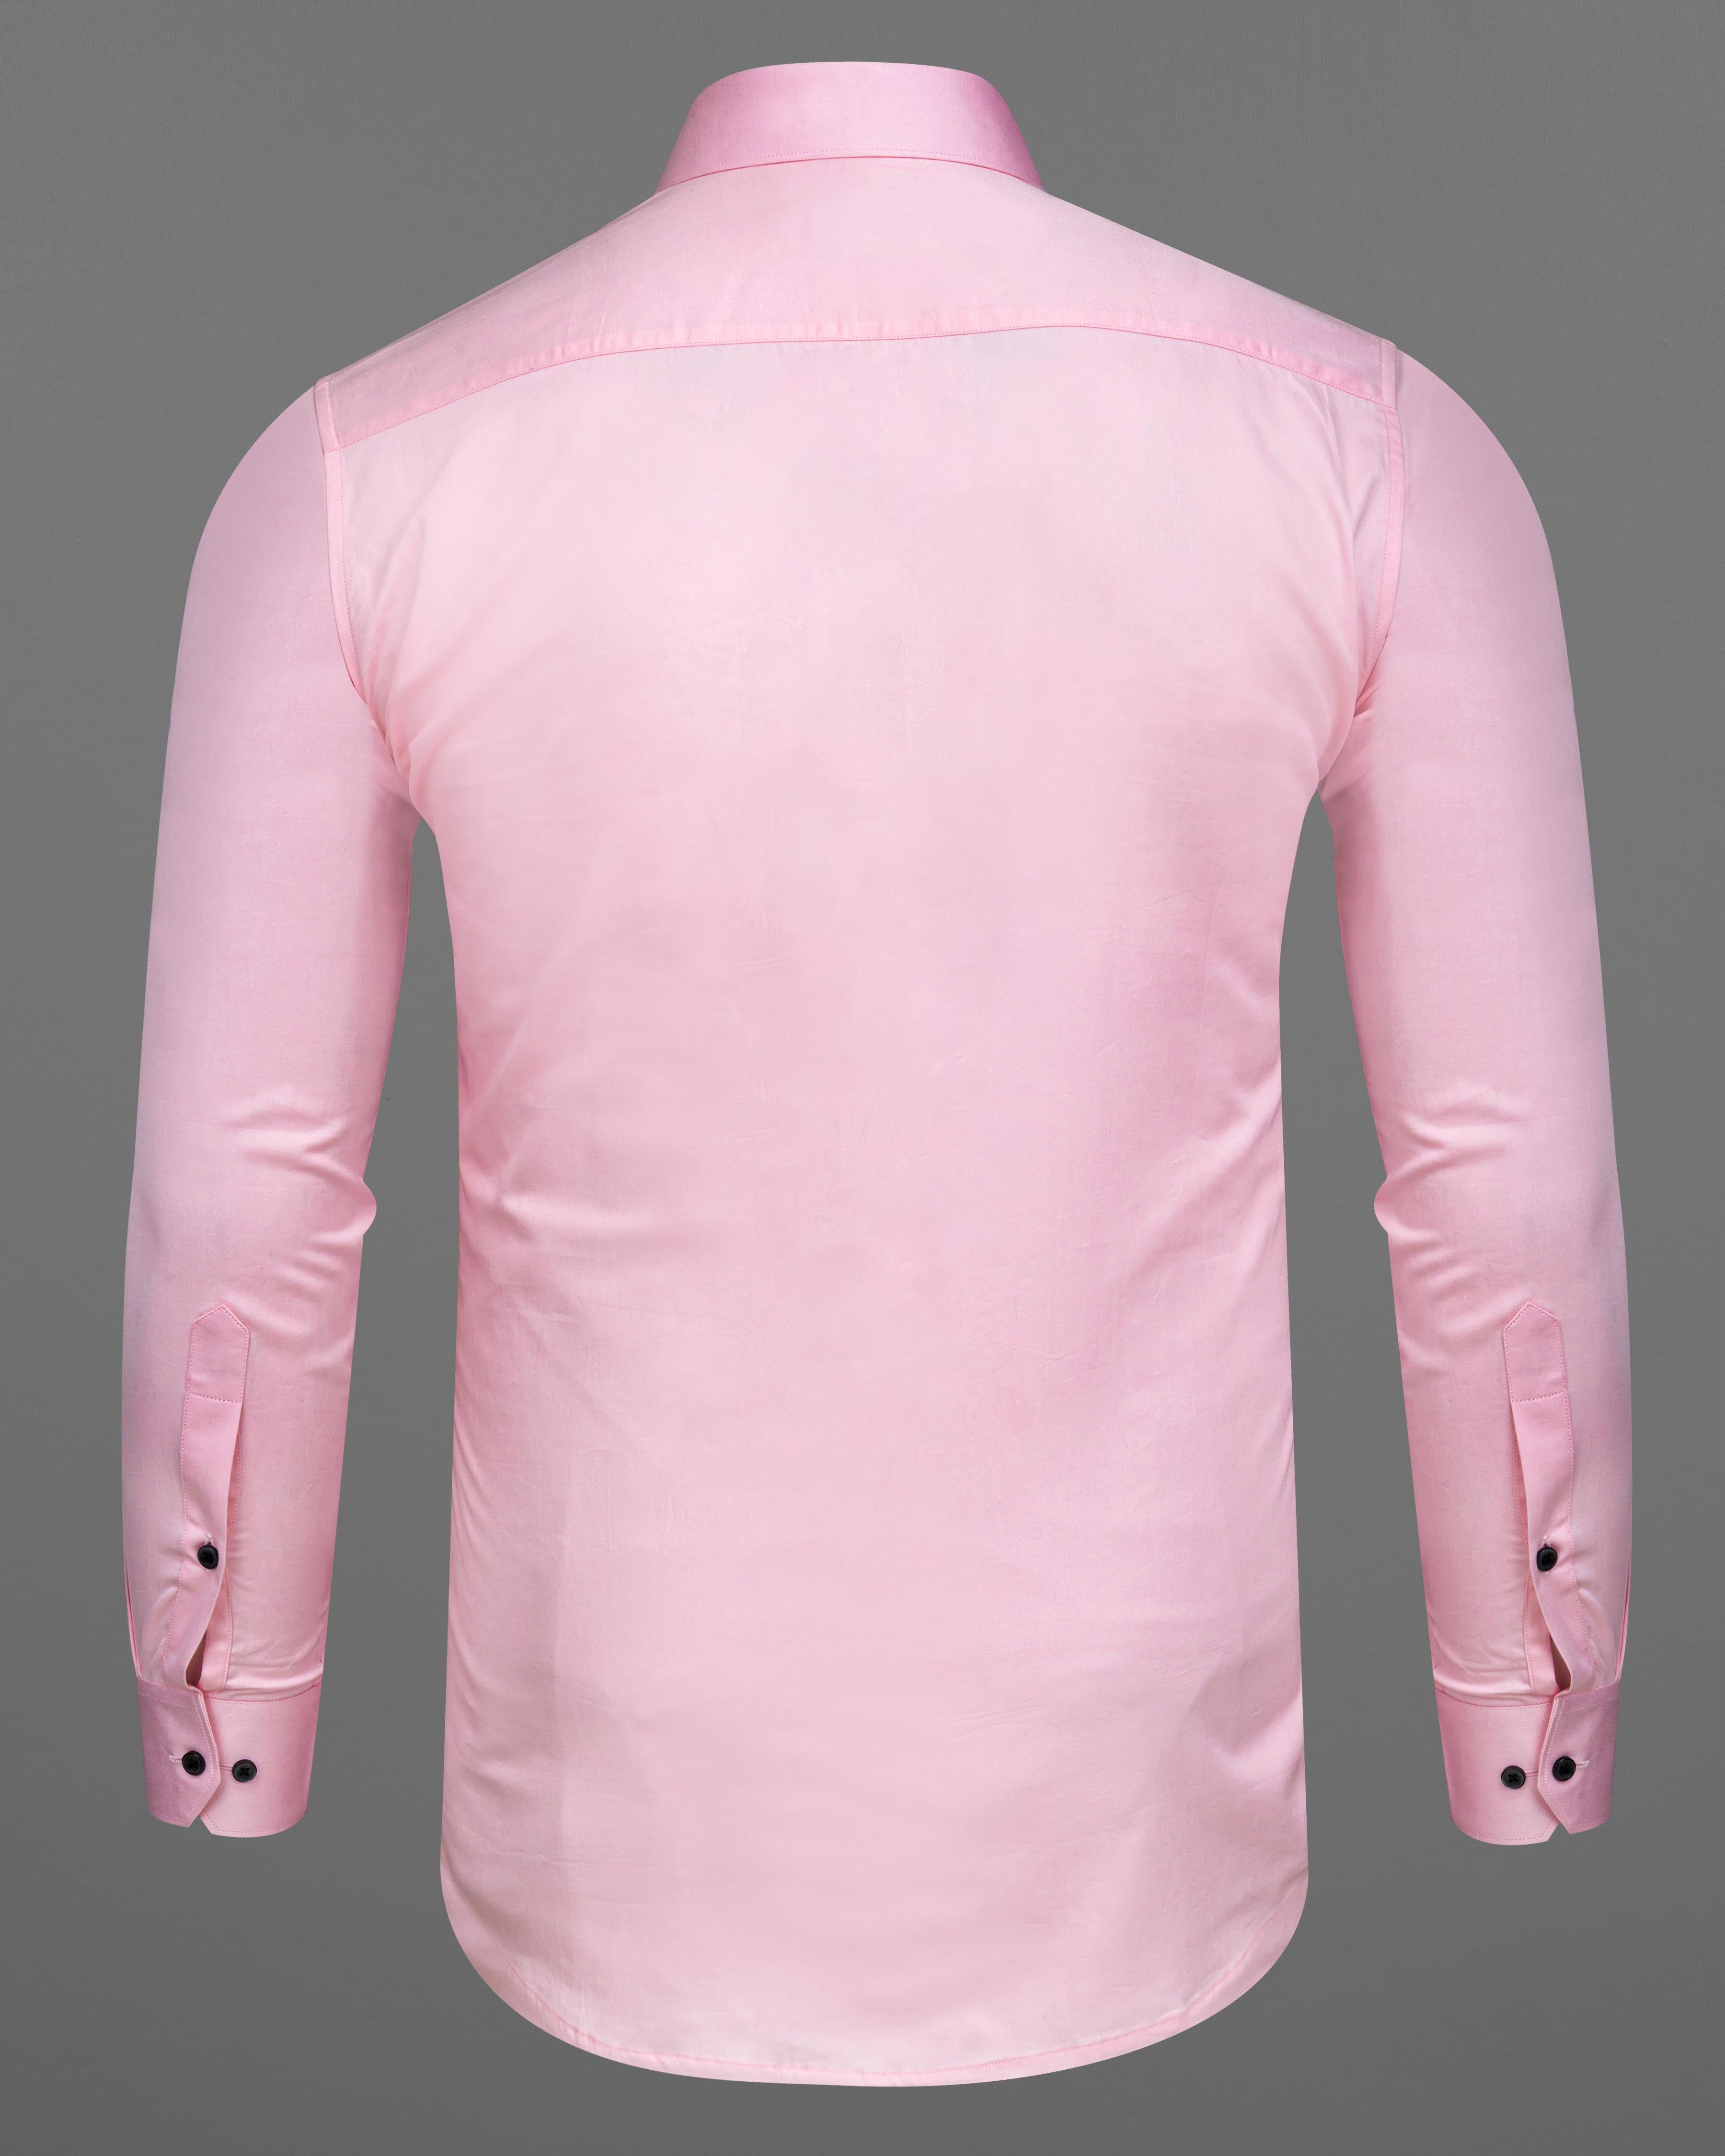 Pastel Pink Super Soft Premium Cotton Shirt  8683-BLK-38,8683-BLK-H-38,8683-BLK-39,8683-BLK-H-39,8683-BLK-40,8683-BLK-H-40,8683-BLK-42,8683-BLK-H-42,8683-BLK-44,8683-BLK-H-44,8683-BLK-46,8683-BLK-H-46,8683-BLK-48,8683-BLK-H-48,8683-BLK-50,8683-BLK-H-50,8683-BLK-52,8683-BLK-H-52